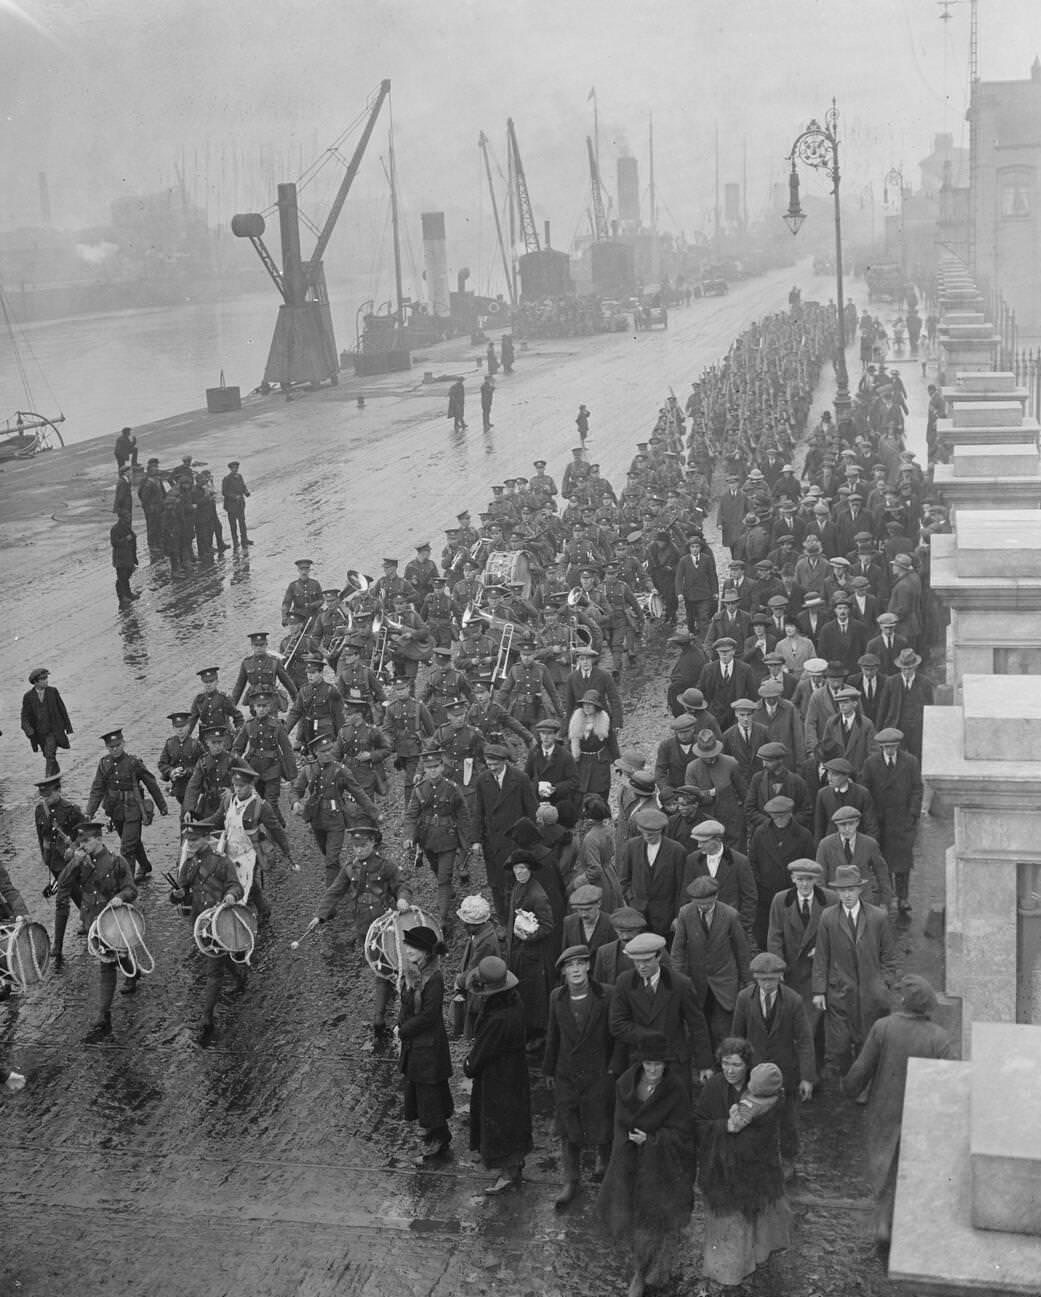 An embarkation scene as British troops evacuate Ireland, 1922.